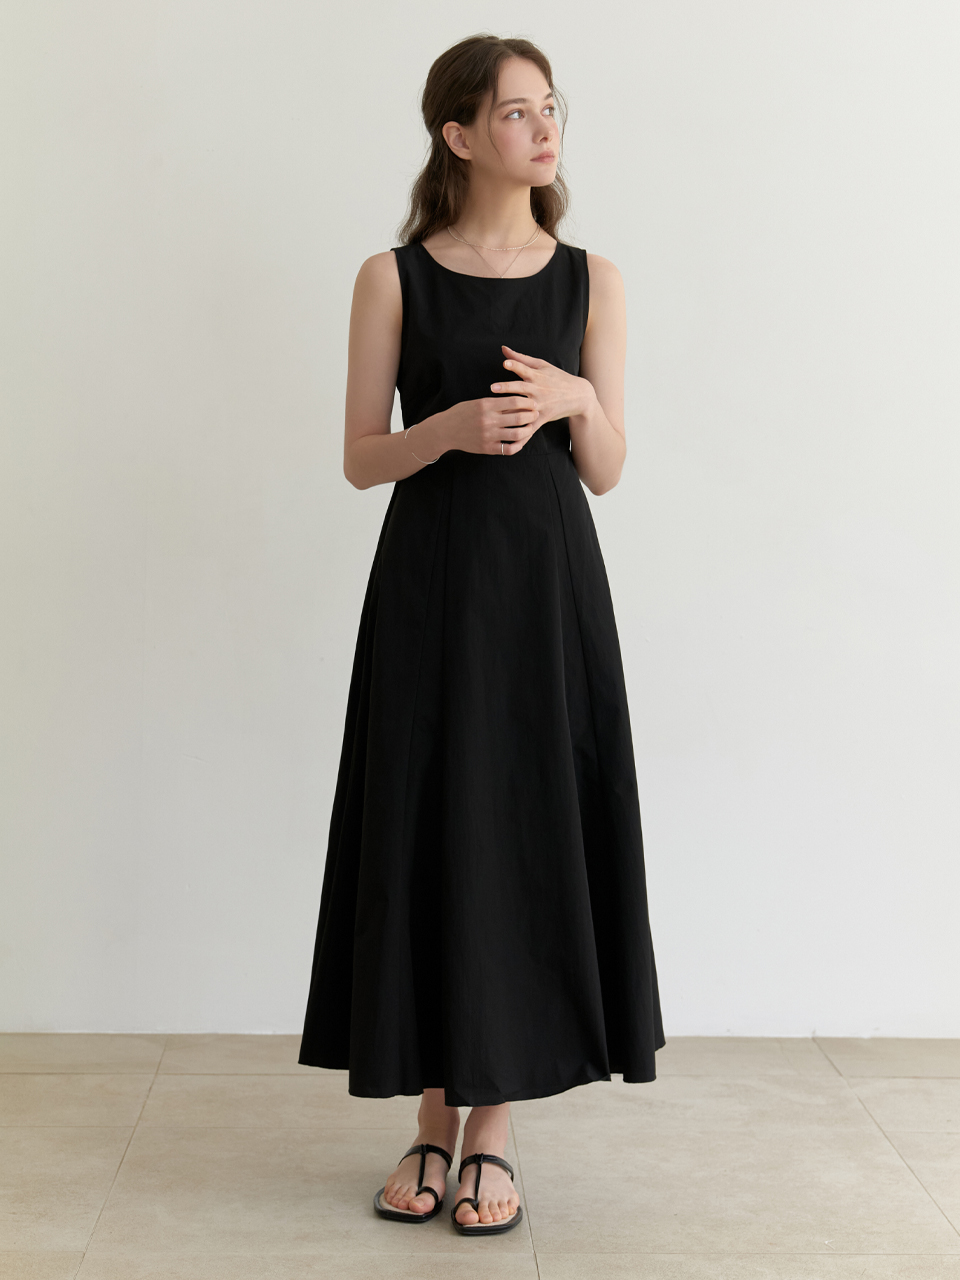 Basta sleeveless dress (black)